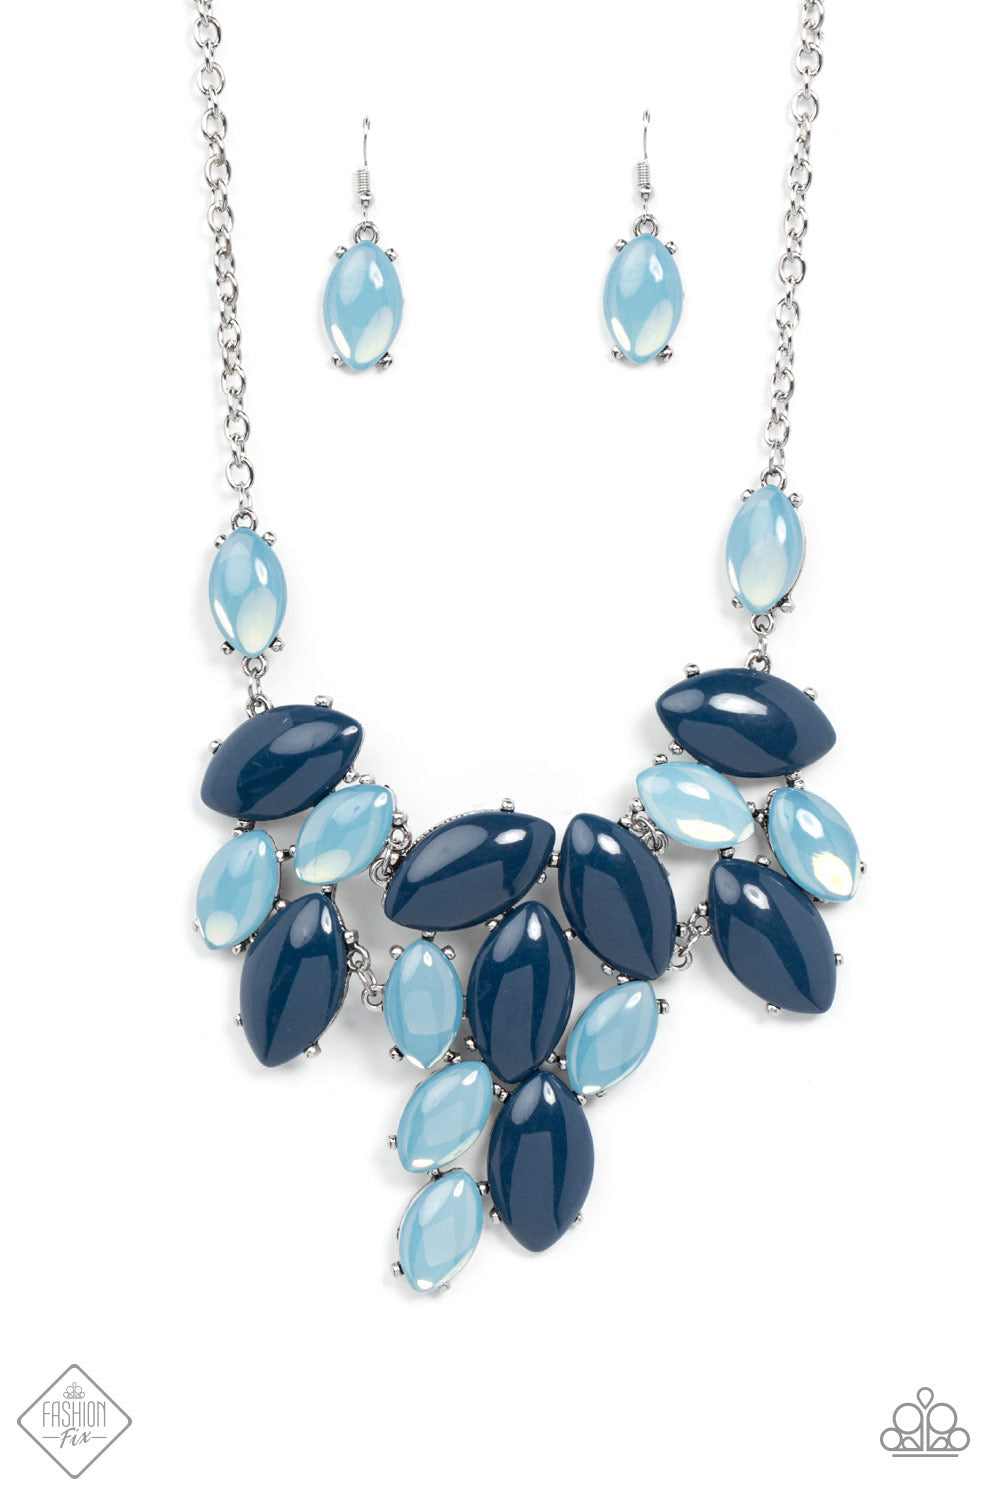 Date Night Nouveau - Blue Necklace (GM-1021) freeshipping - JewLz4u Gemstone Gallery